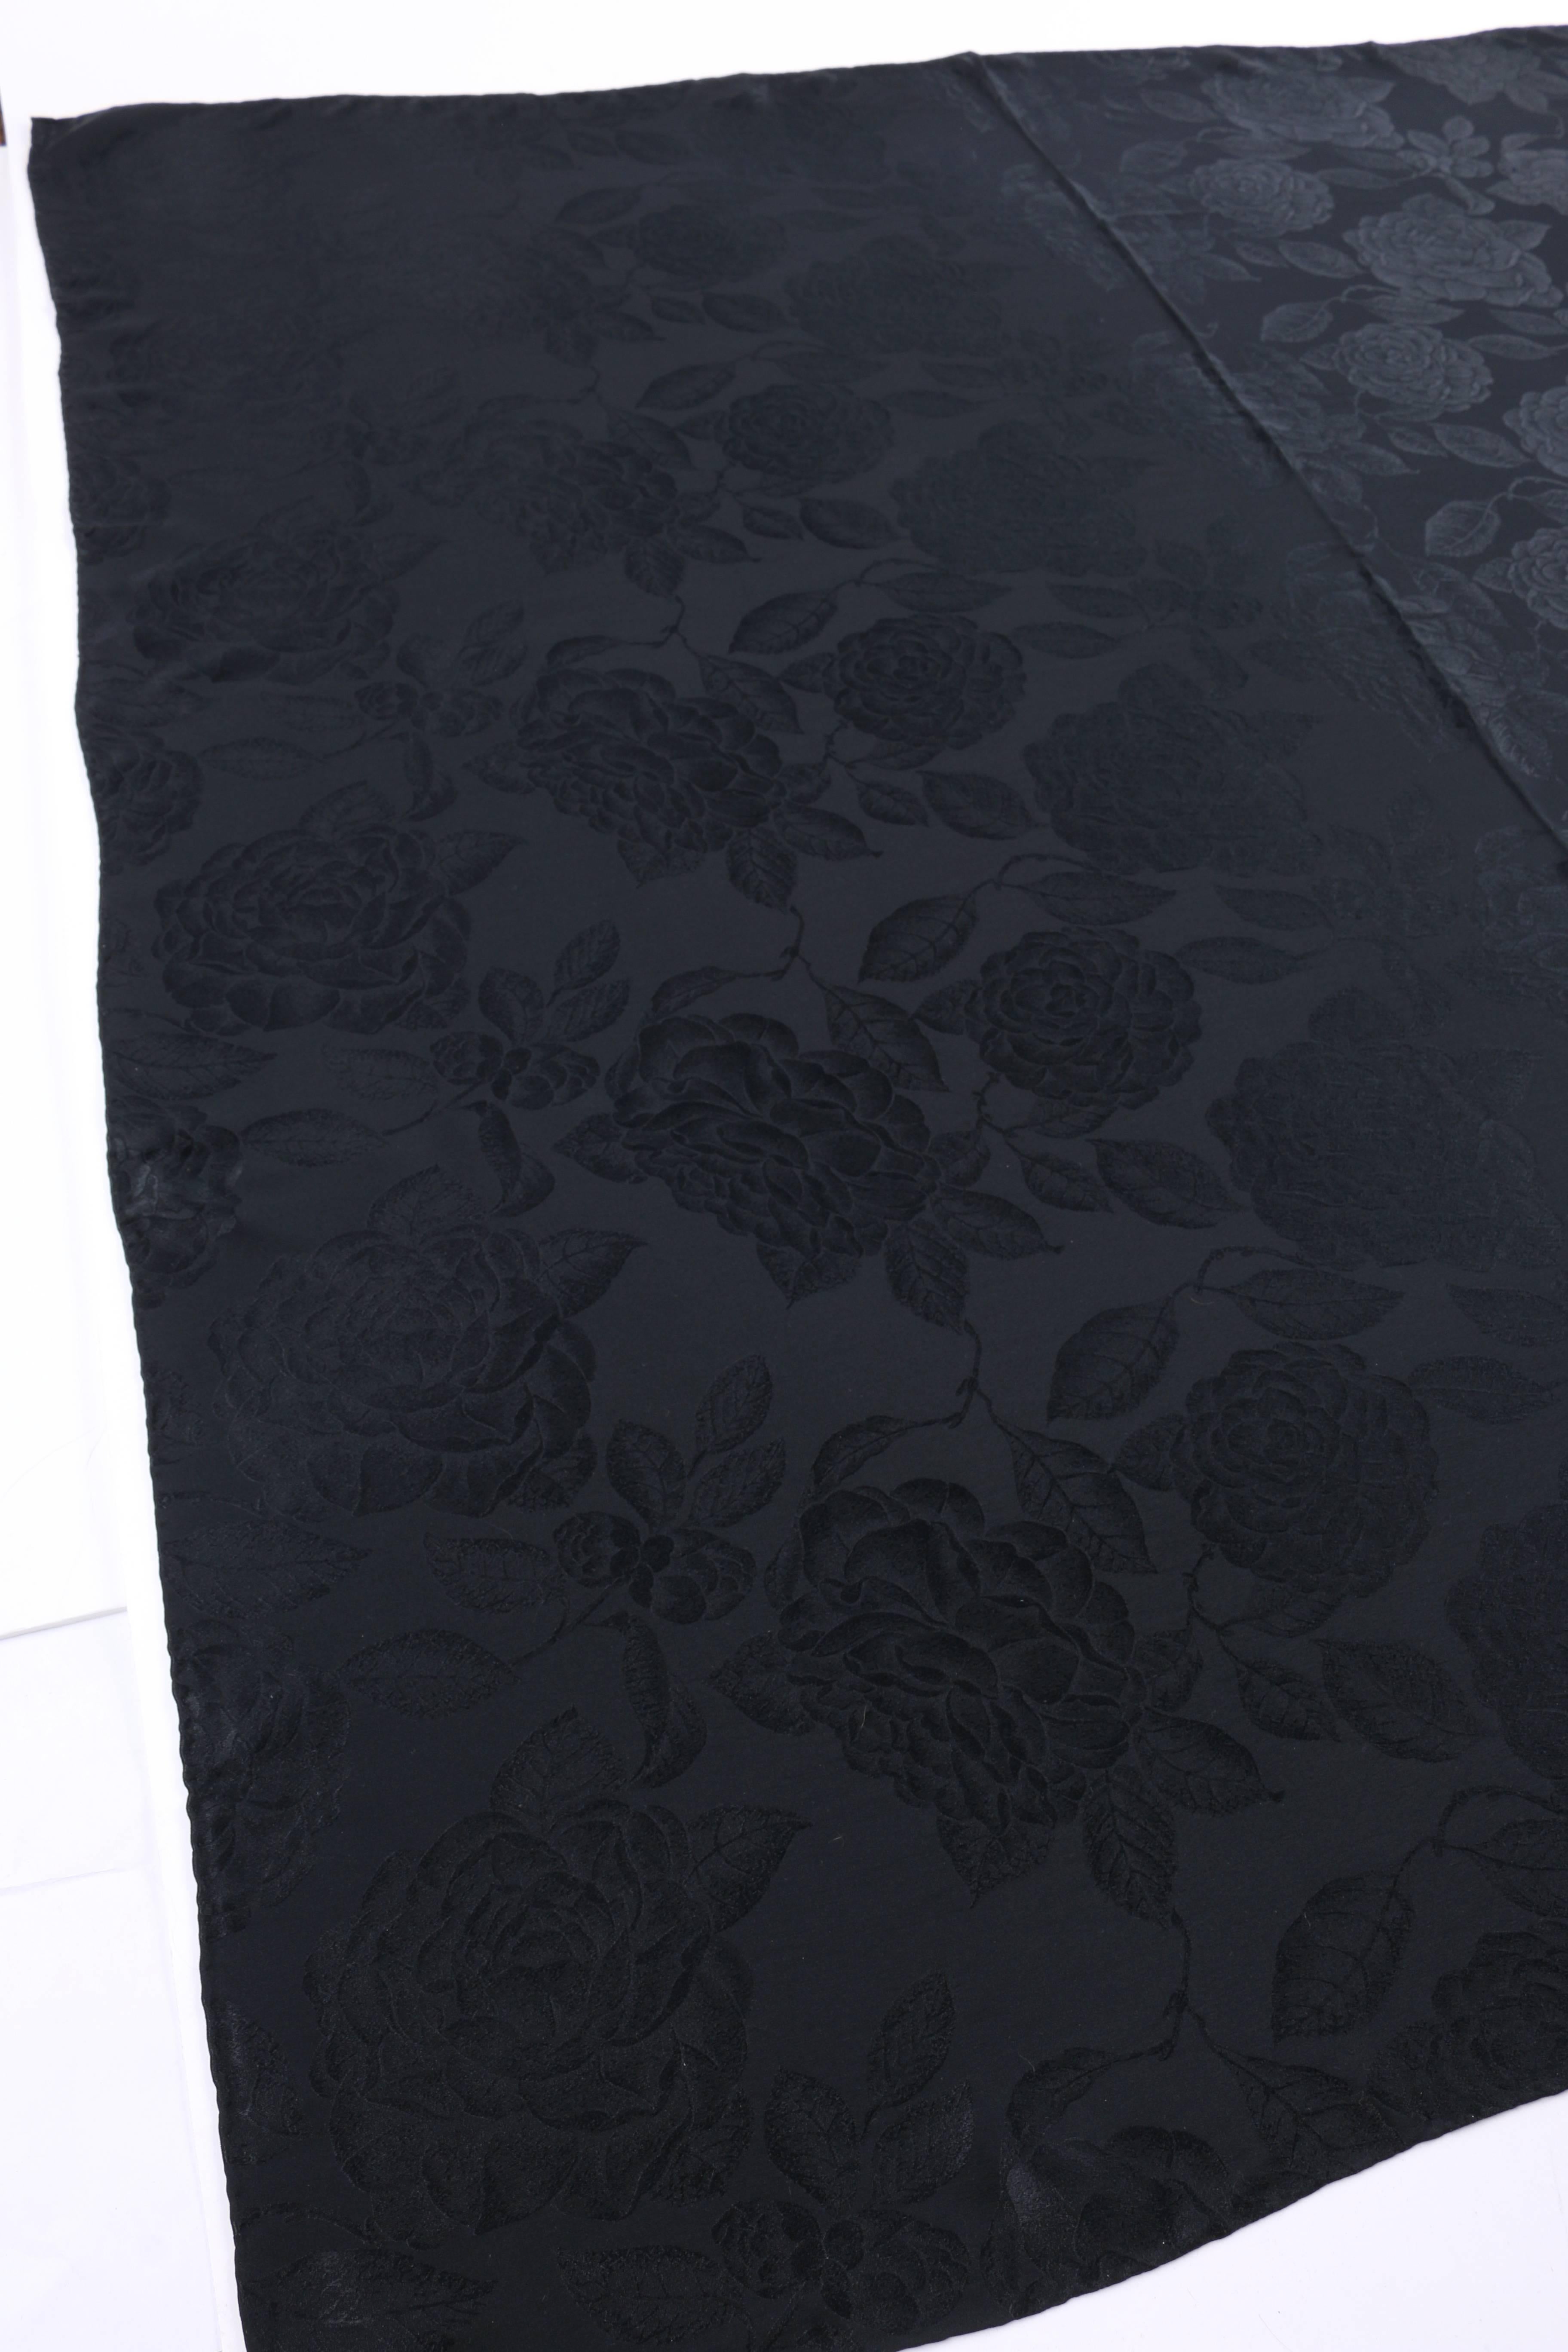 CHANEL Black Satin Camellia Print 100% Silk Large Scarf Wrap Shawl With Box  4